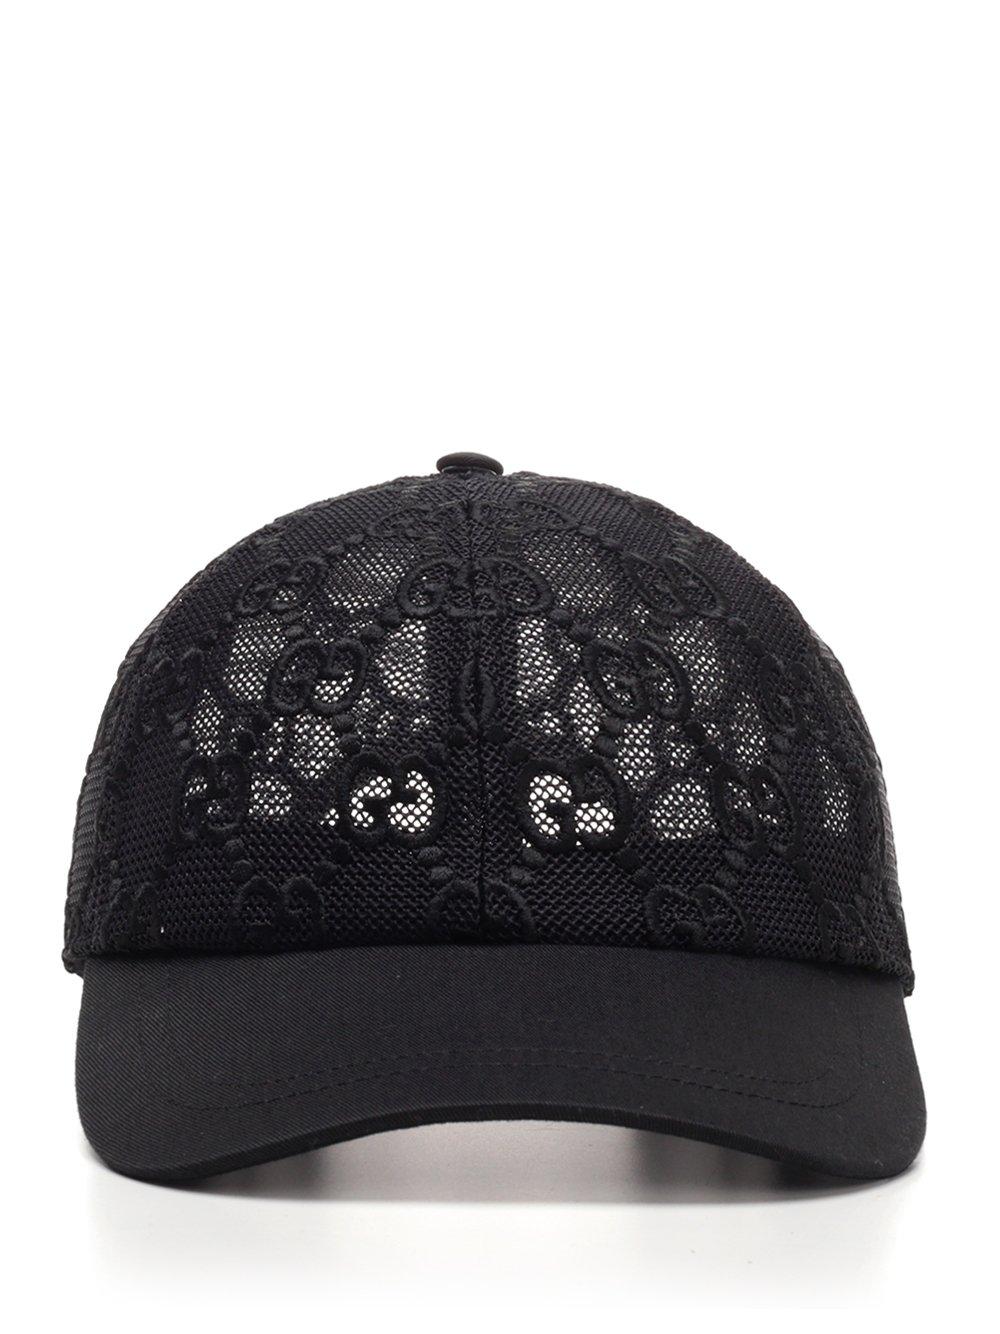 Gucci Black Gg Embroidered Baseball Cap